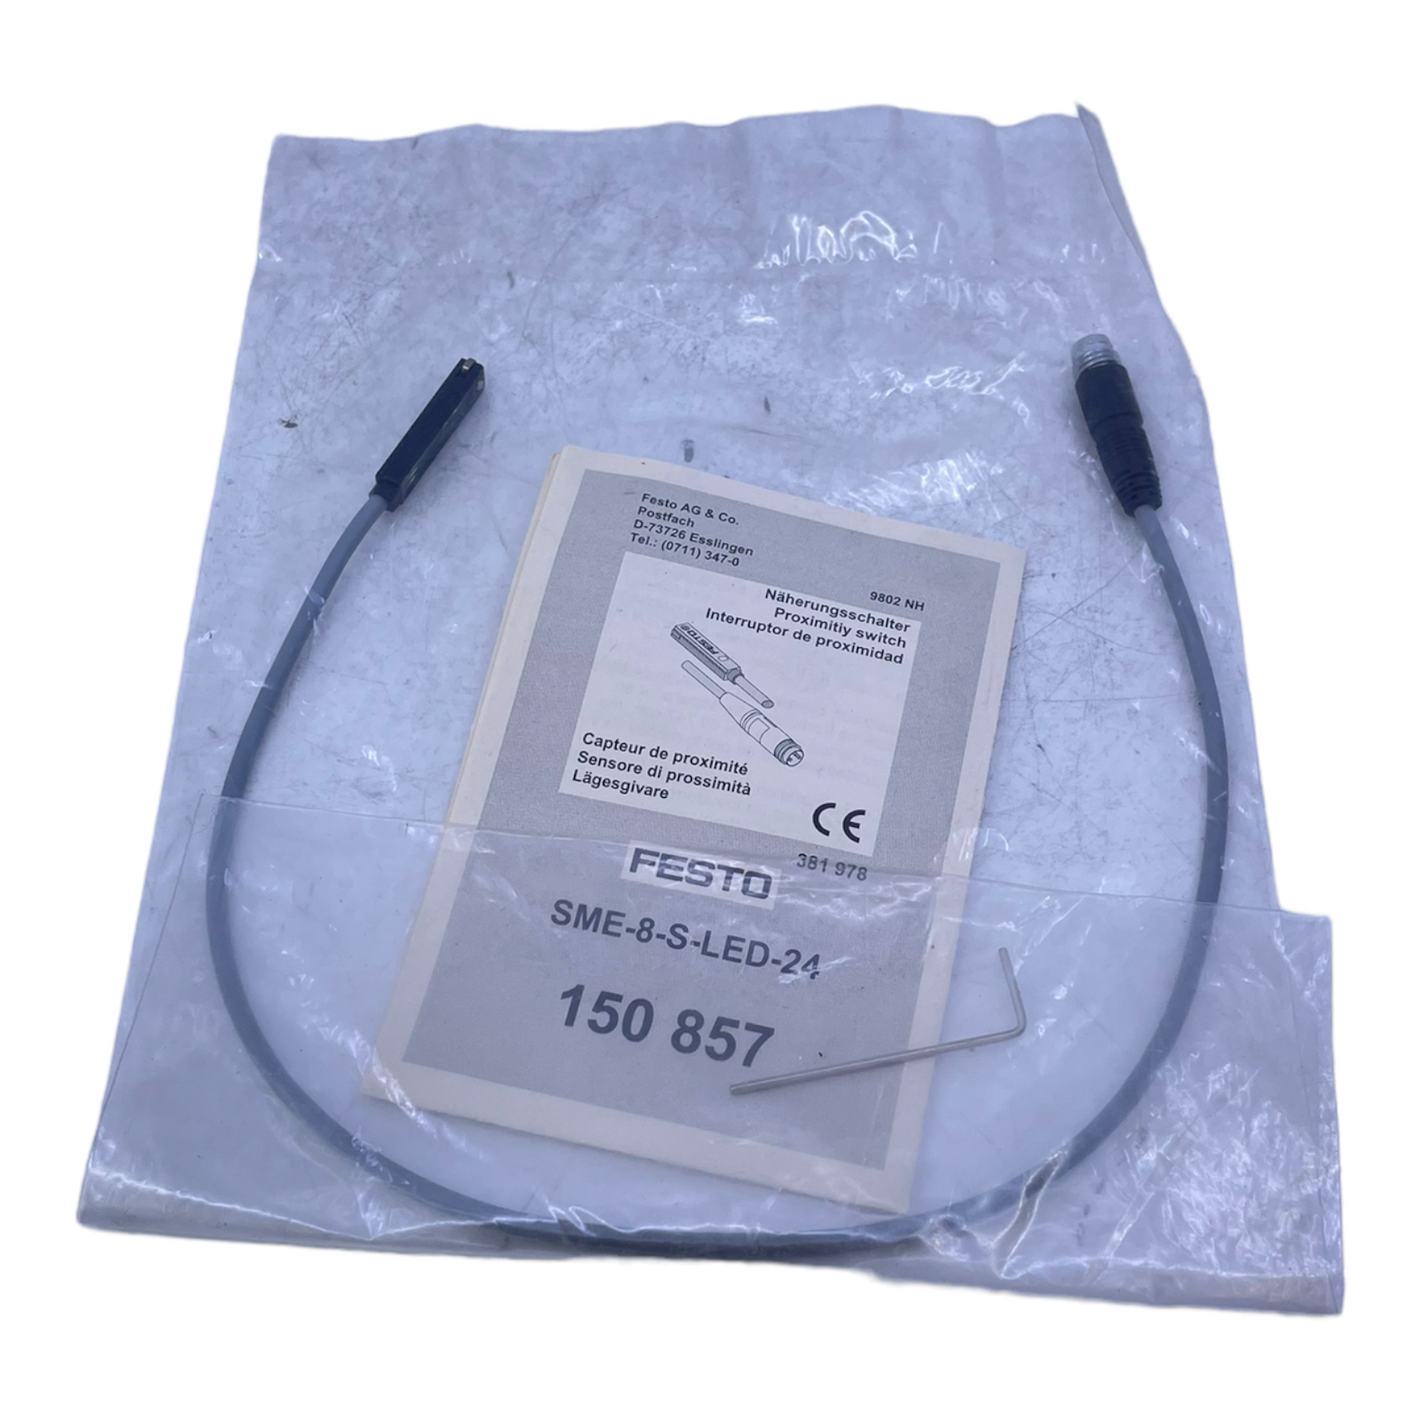 Festo SME-8-S-LED-24 Näherungsschalter 150857 12-30V AC/DC IP67 3-POLIG